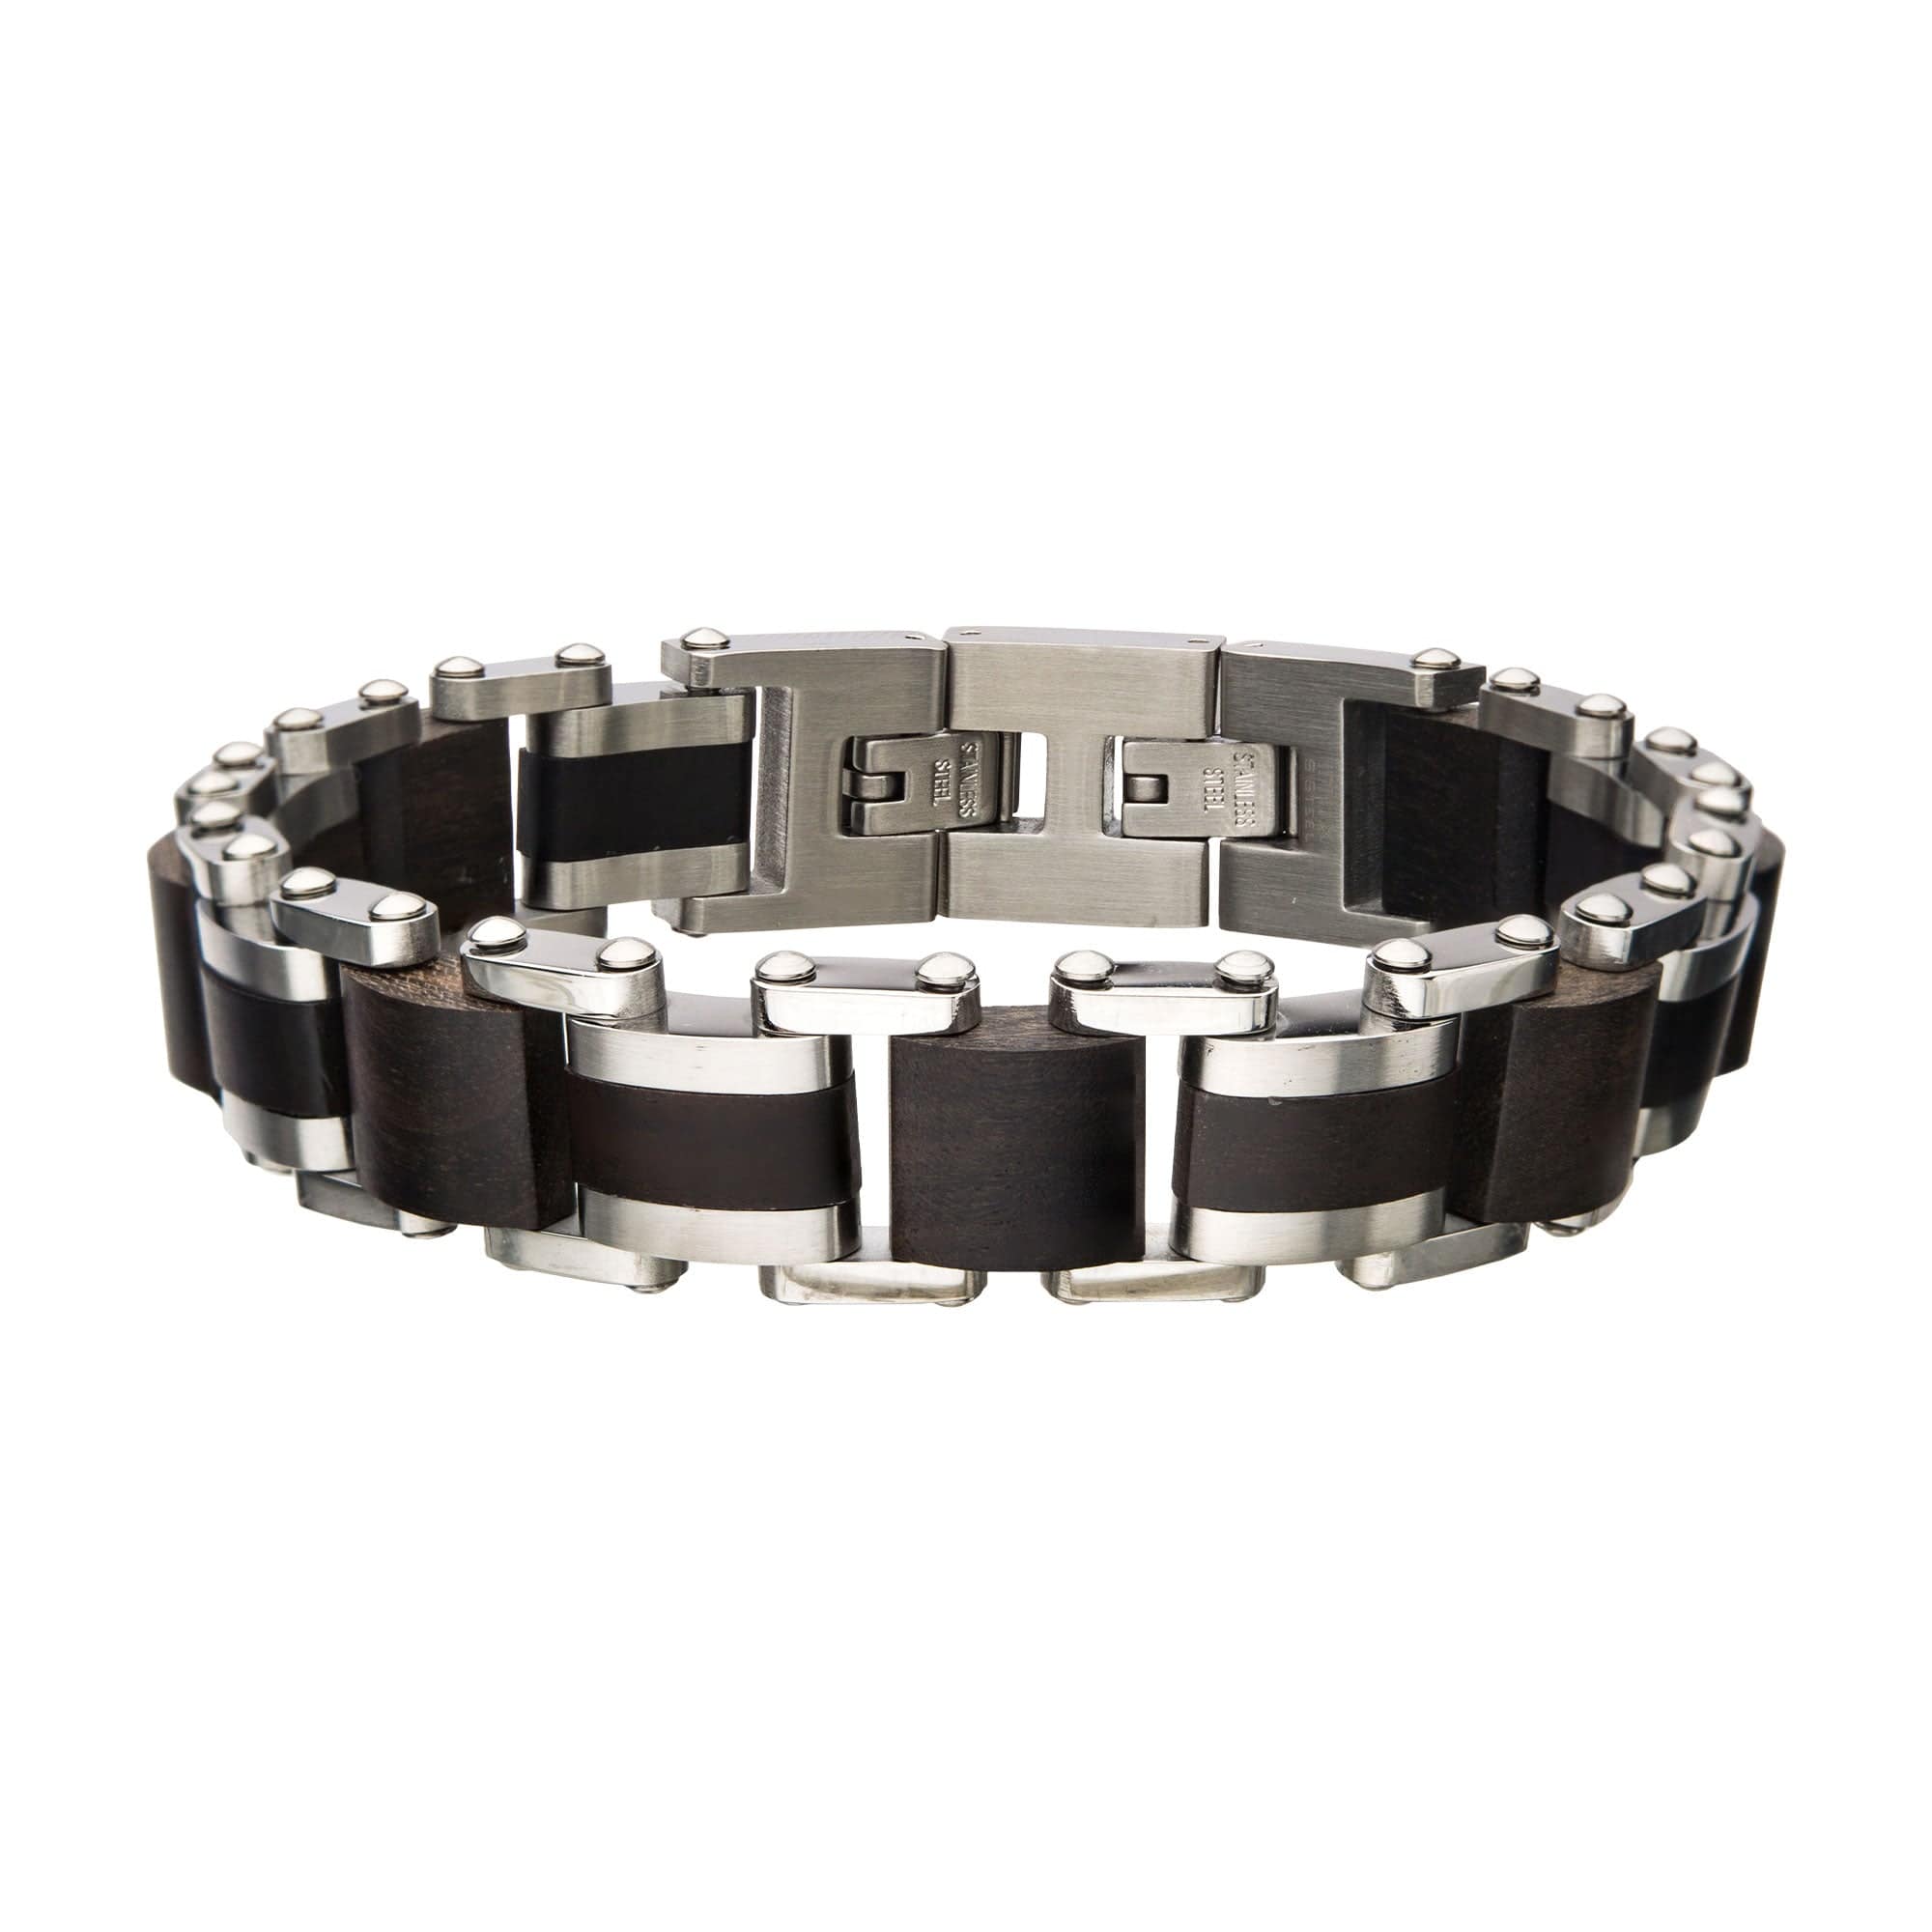 INOX JEWELRY Bracelets Black and Silver Tone Stainless Steel Matte Finish with Ebony Wood Link Bracelet BR34382